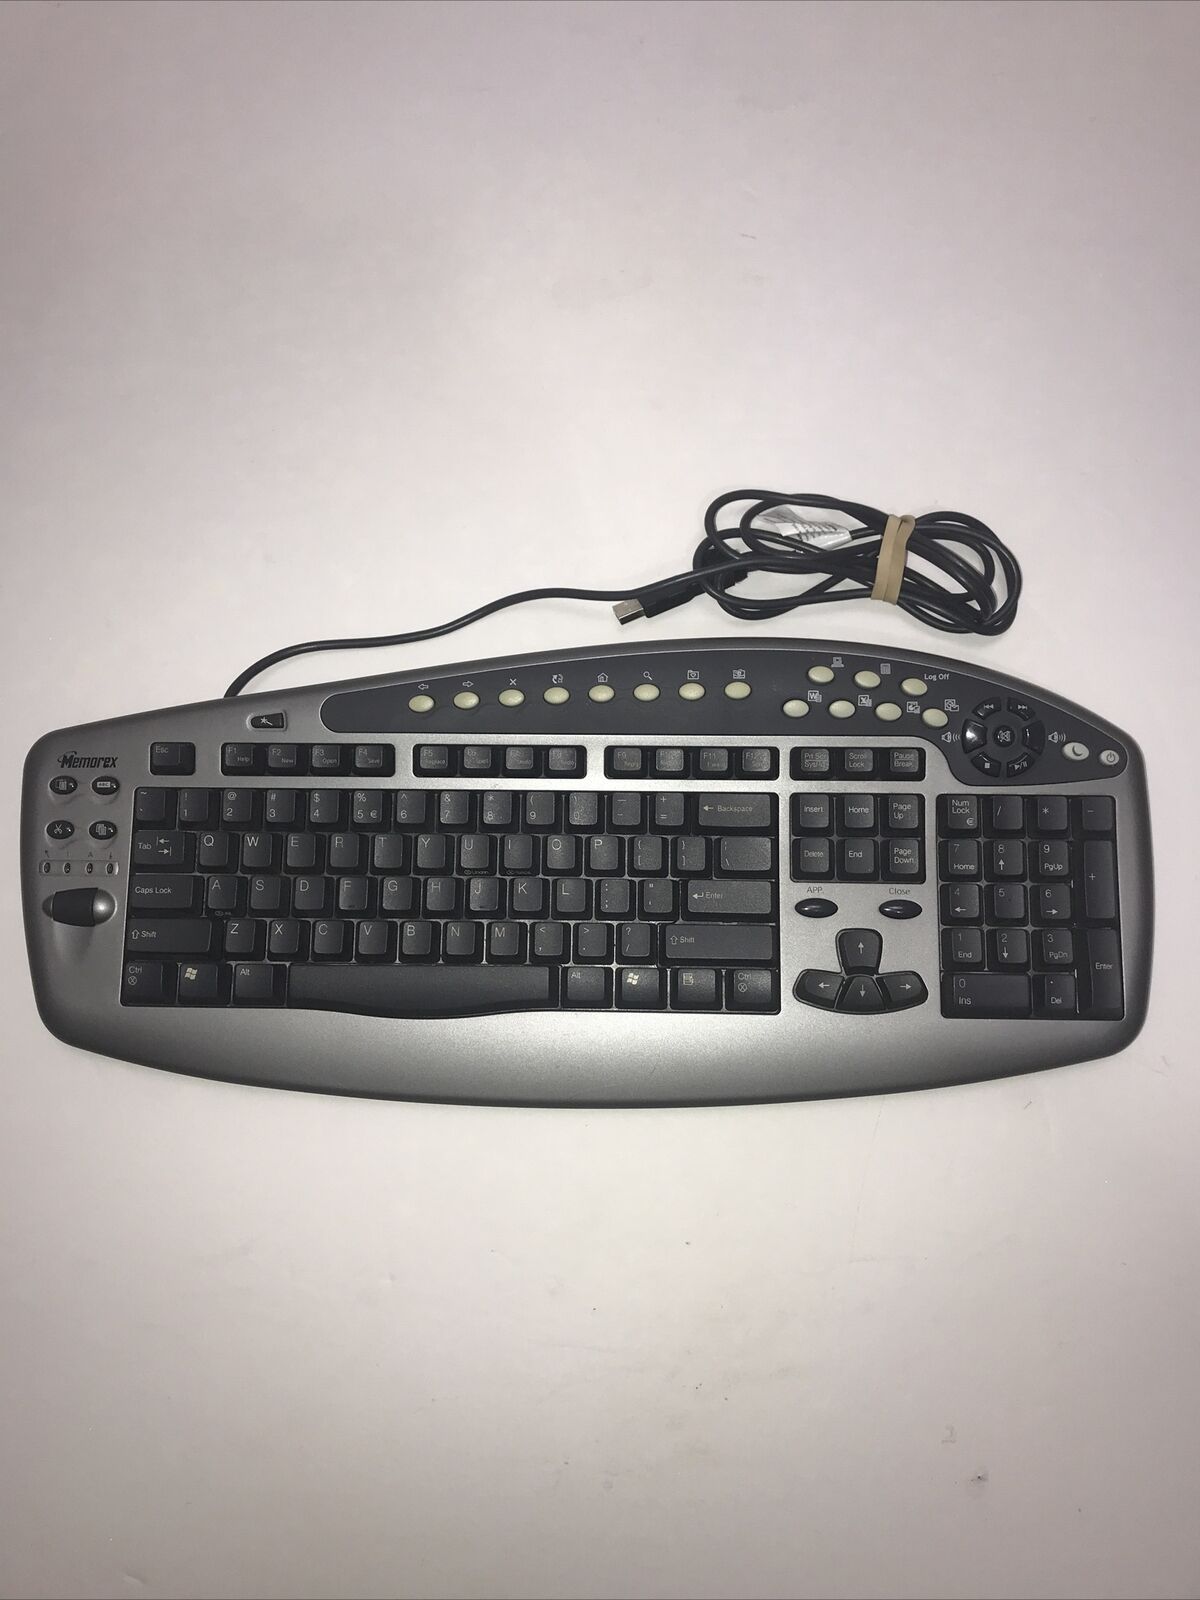 Memorex MX3300 Multimedia Keyboard USB 120 Key Tested And Works